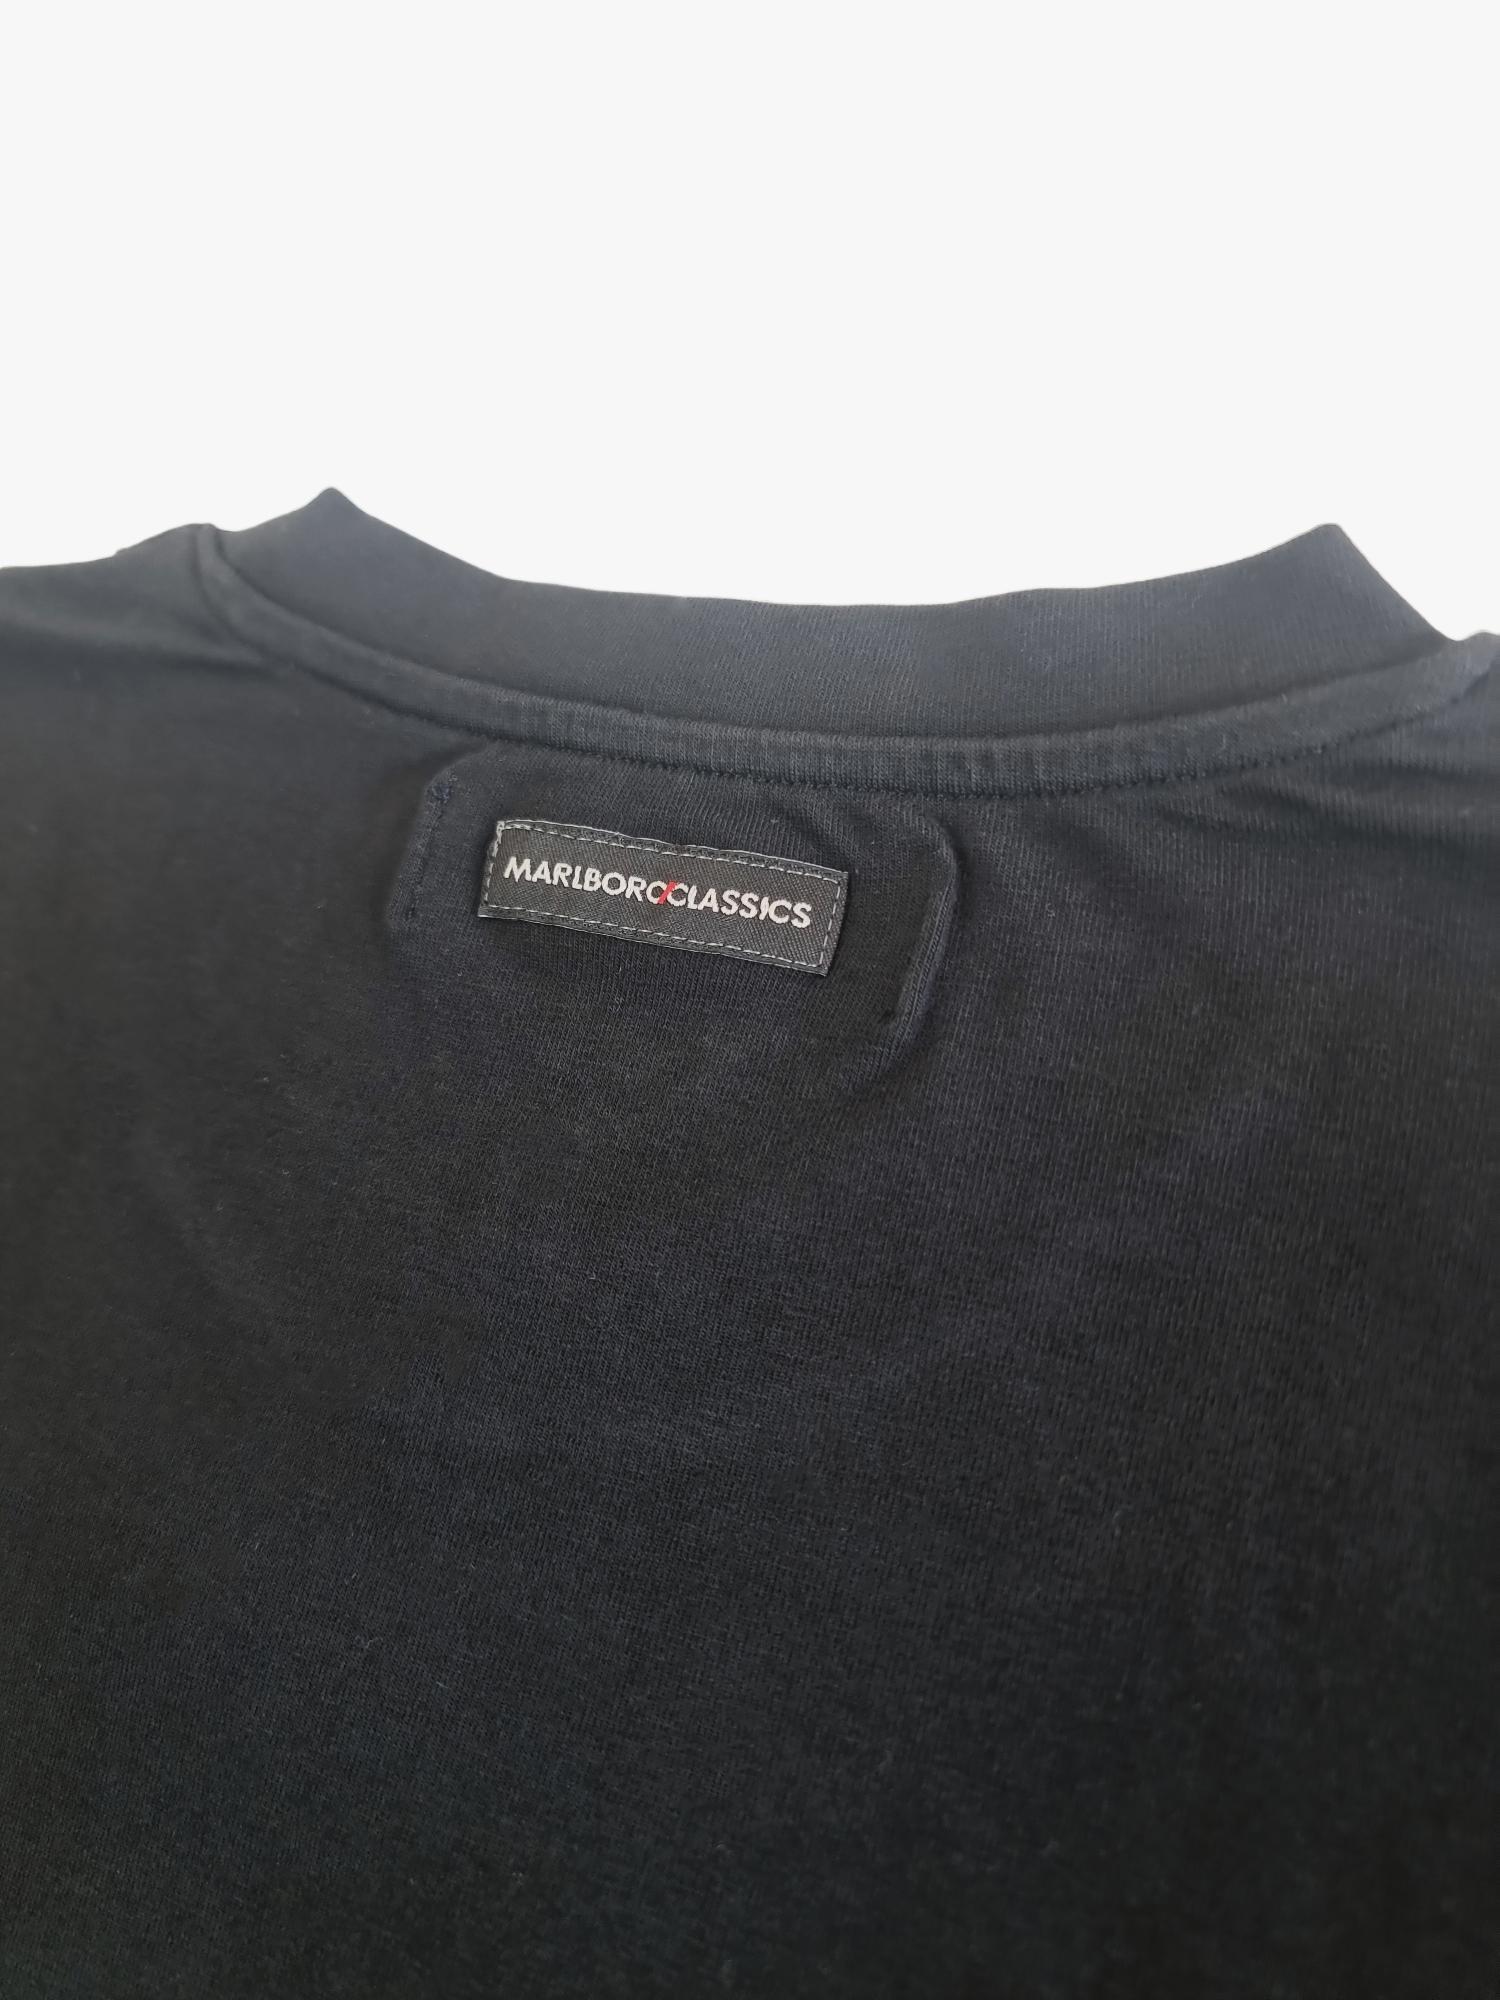 T-shirt Marlboro Classics uomo cotone nero